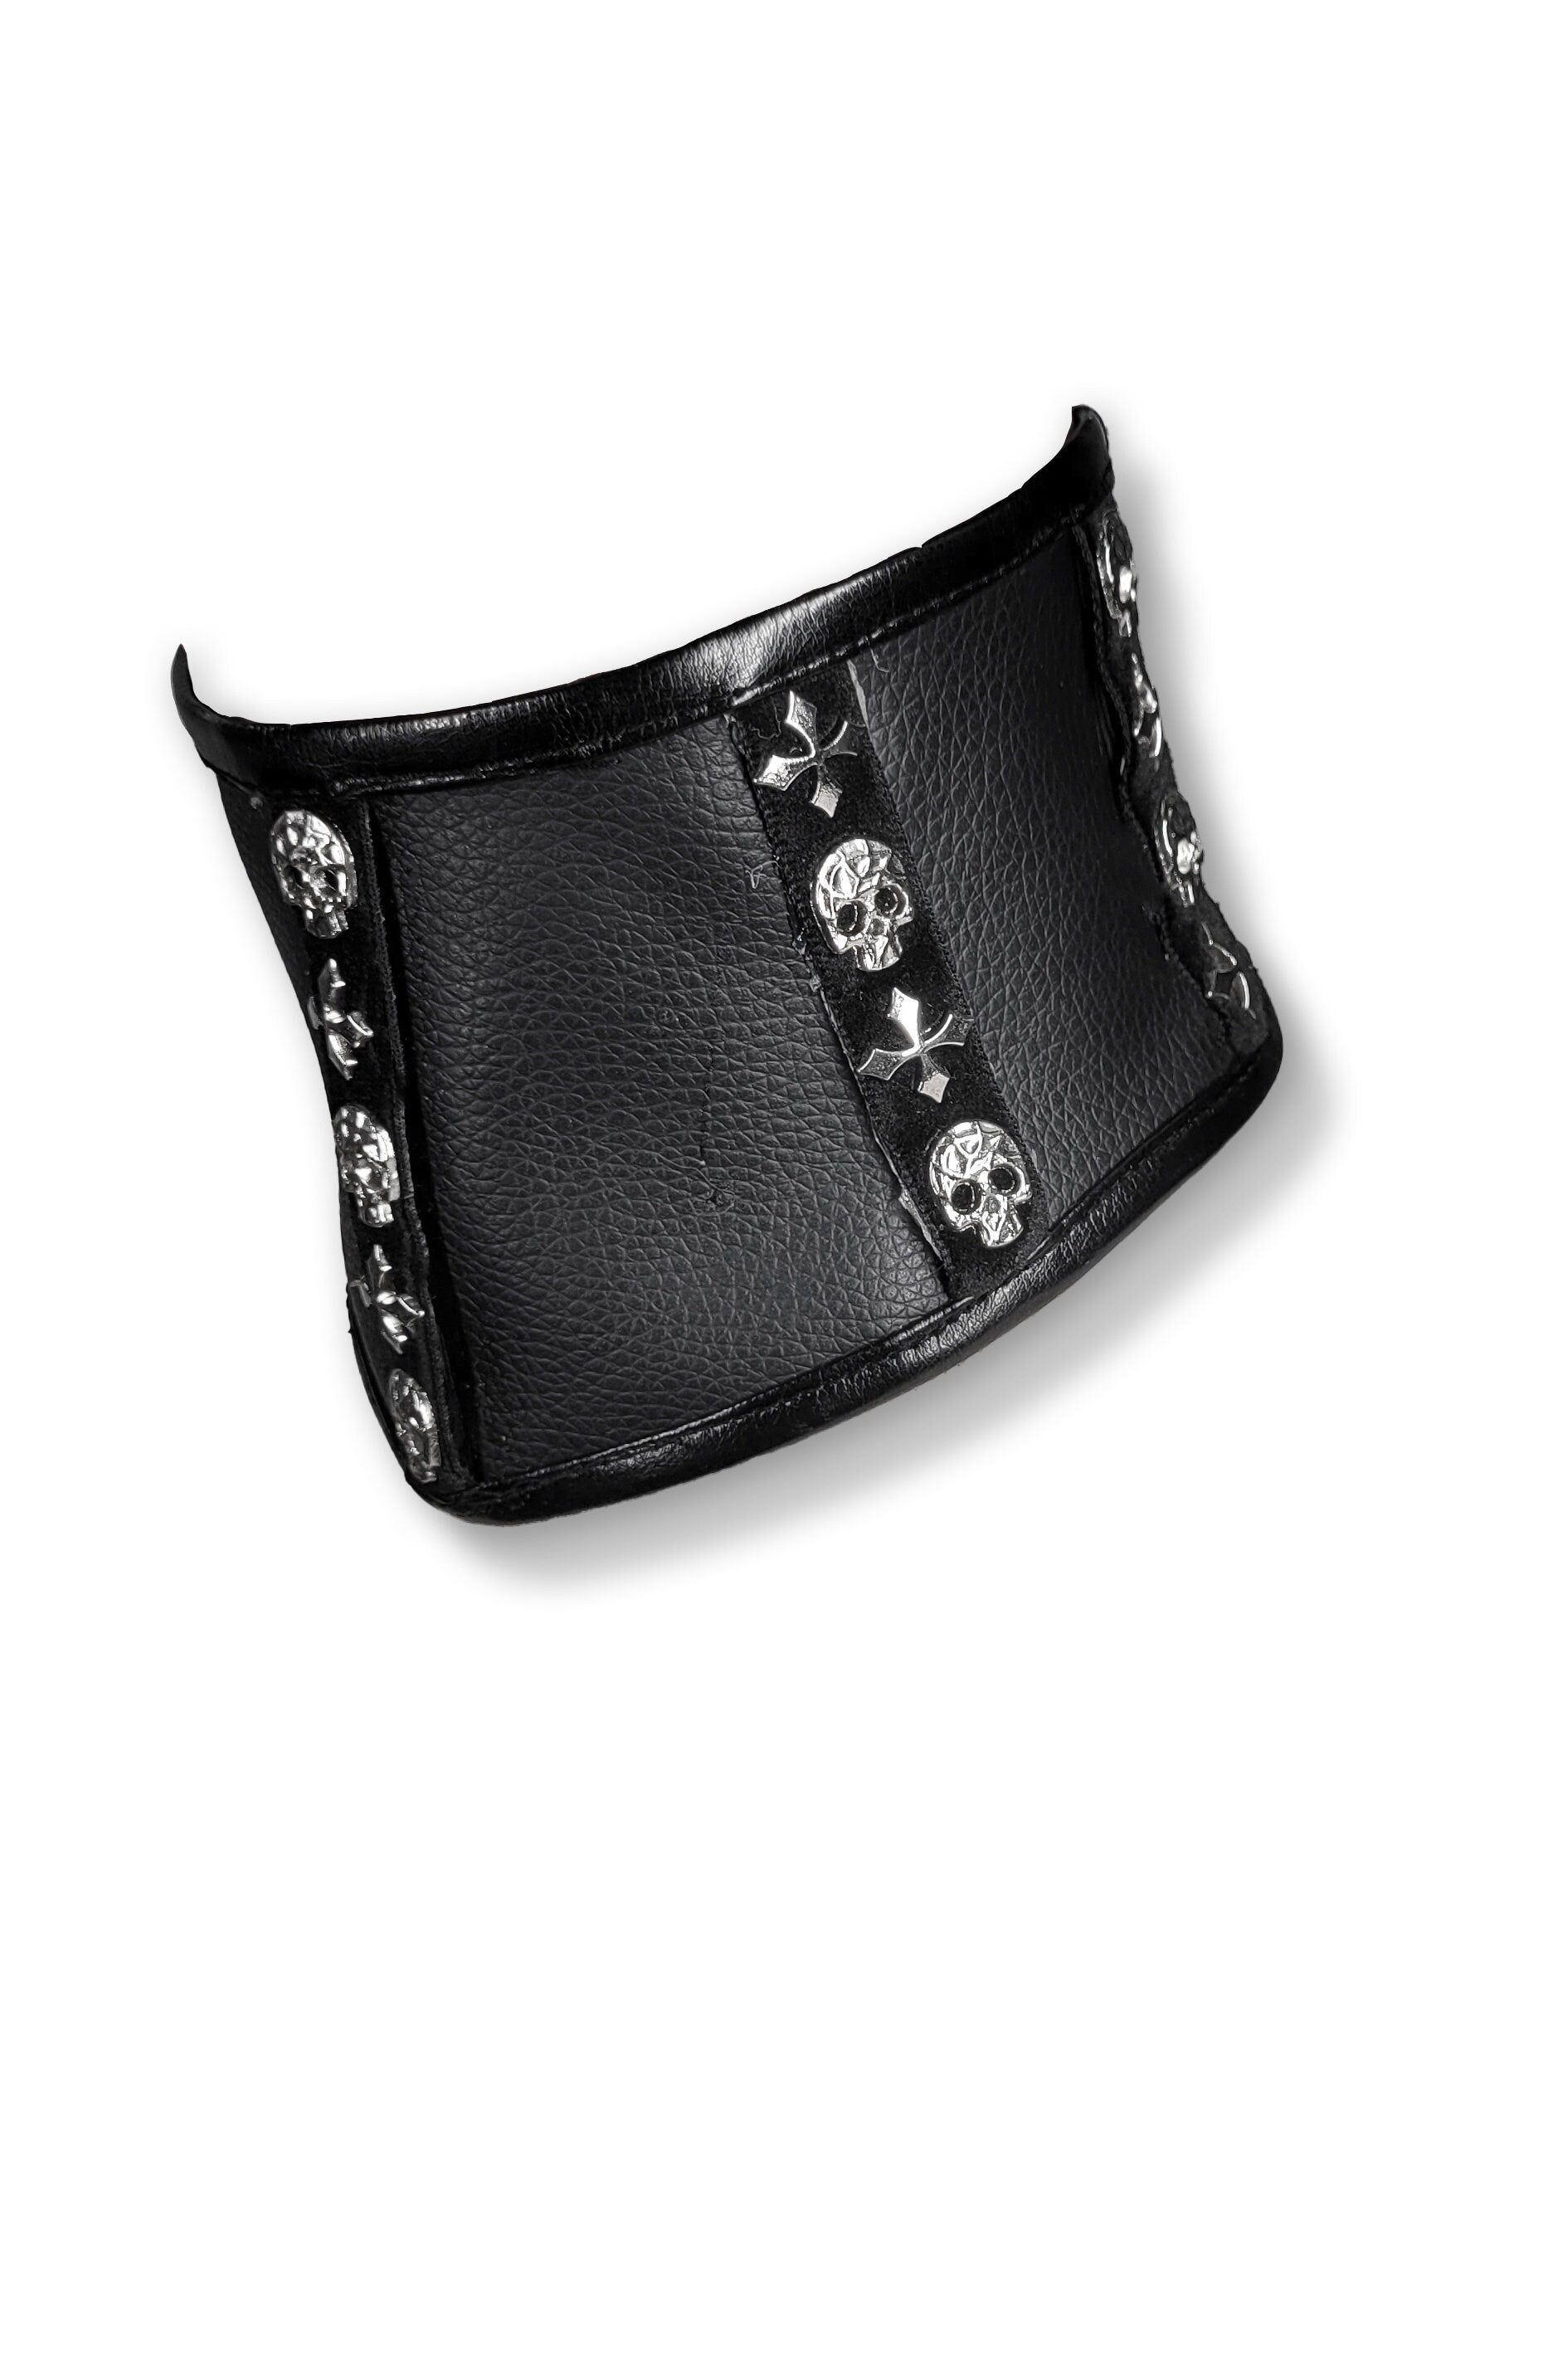 Black skull choker leather corset collar vegan leather choker statement choker | goth choker collar high neck collar  gothic choker